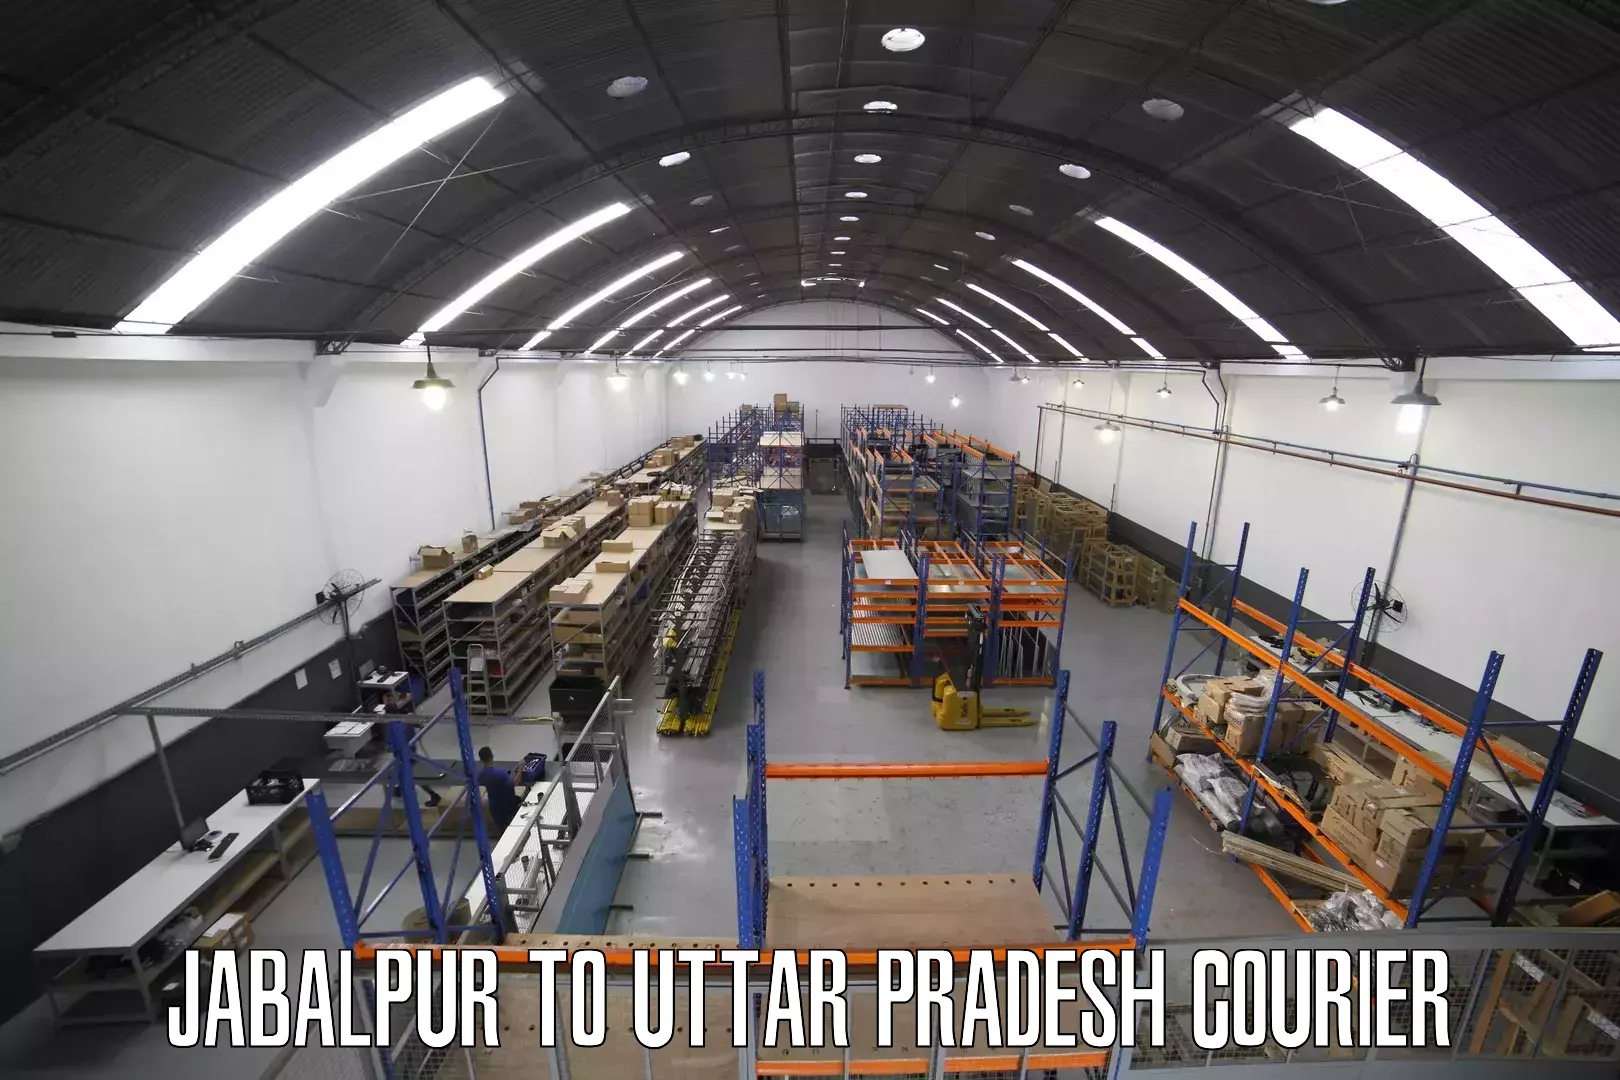 Courier service comparison Jabalpur to Uttar Pradesh